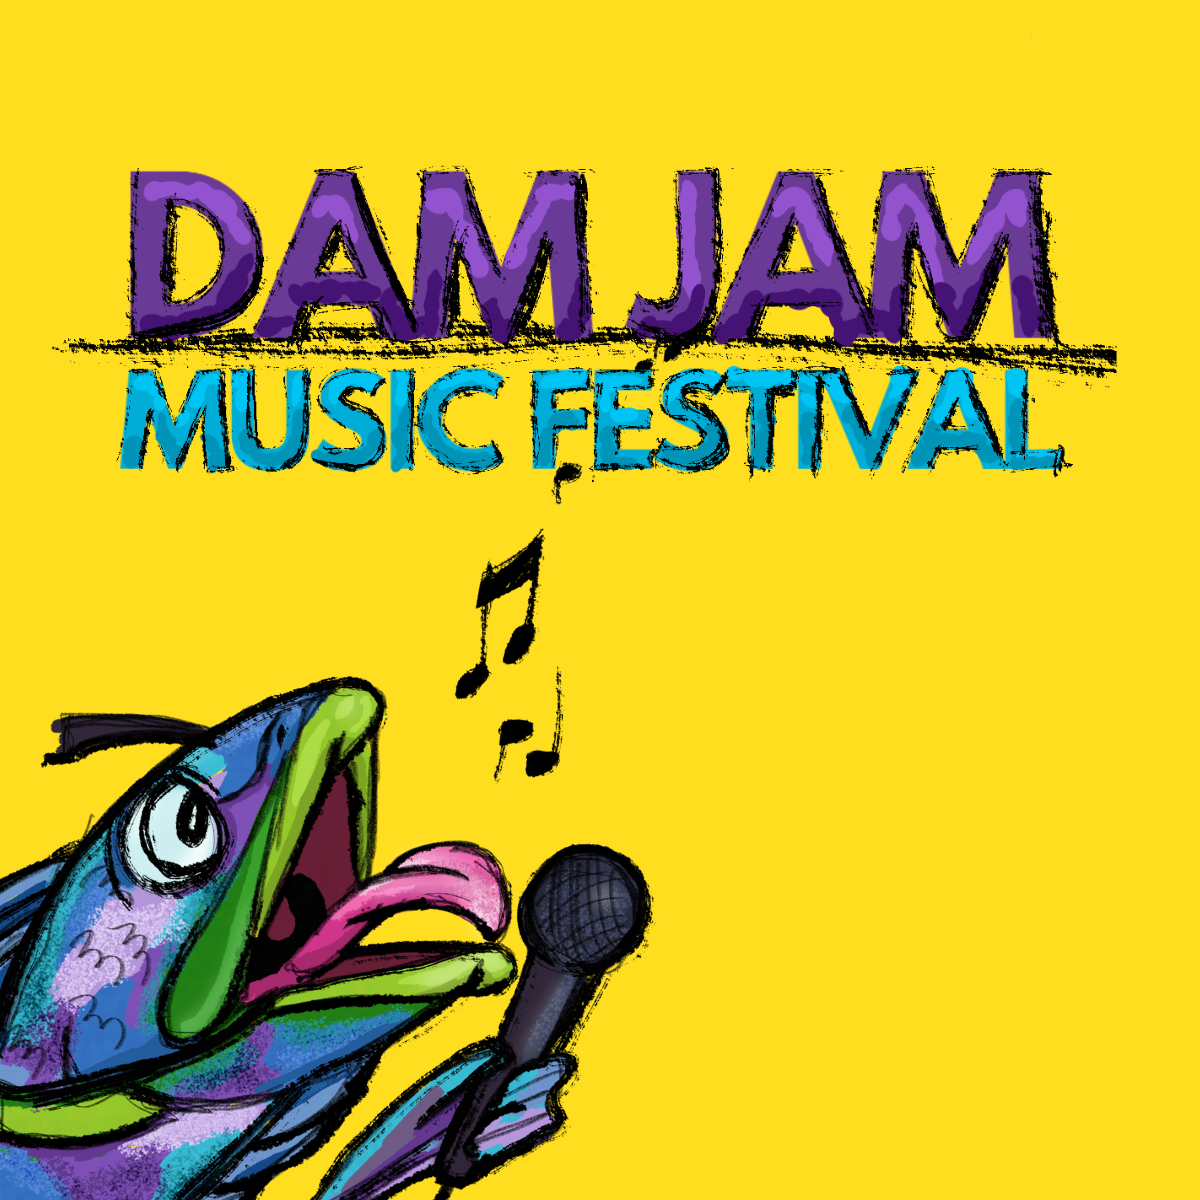 The Dam Jam Music Festival